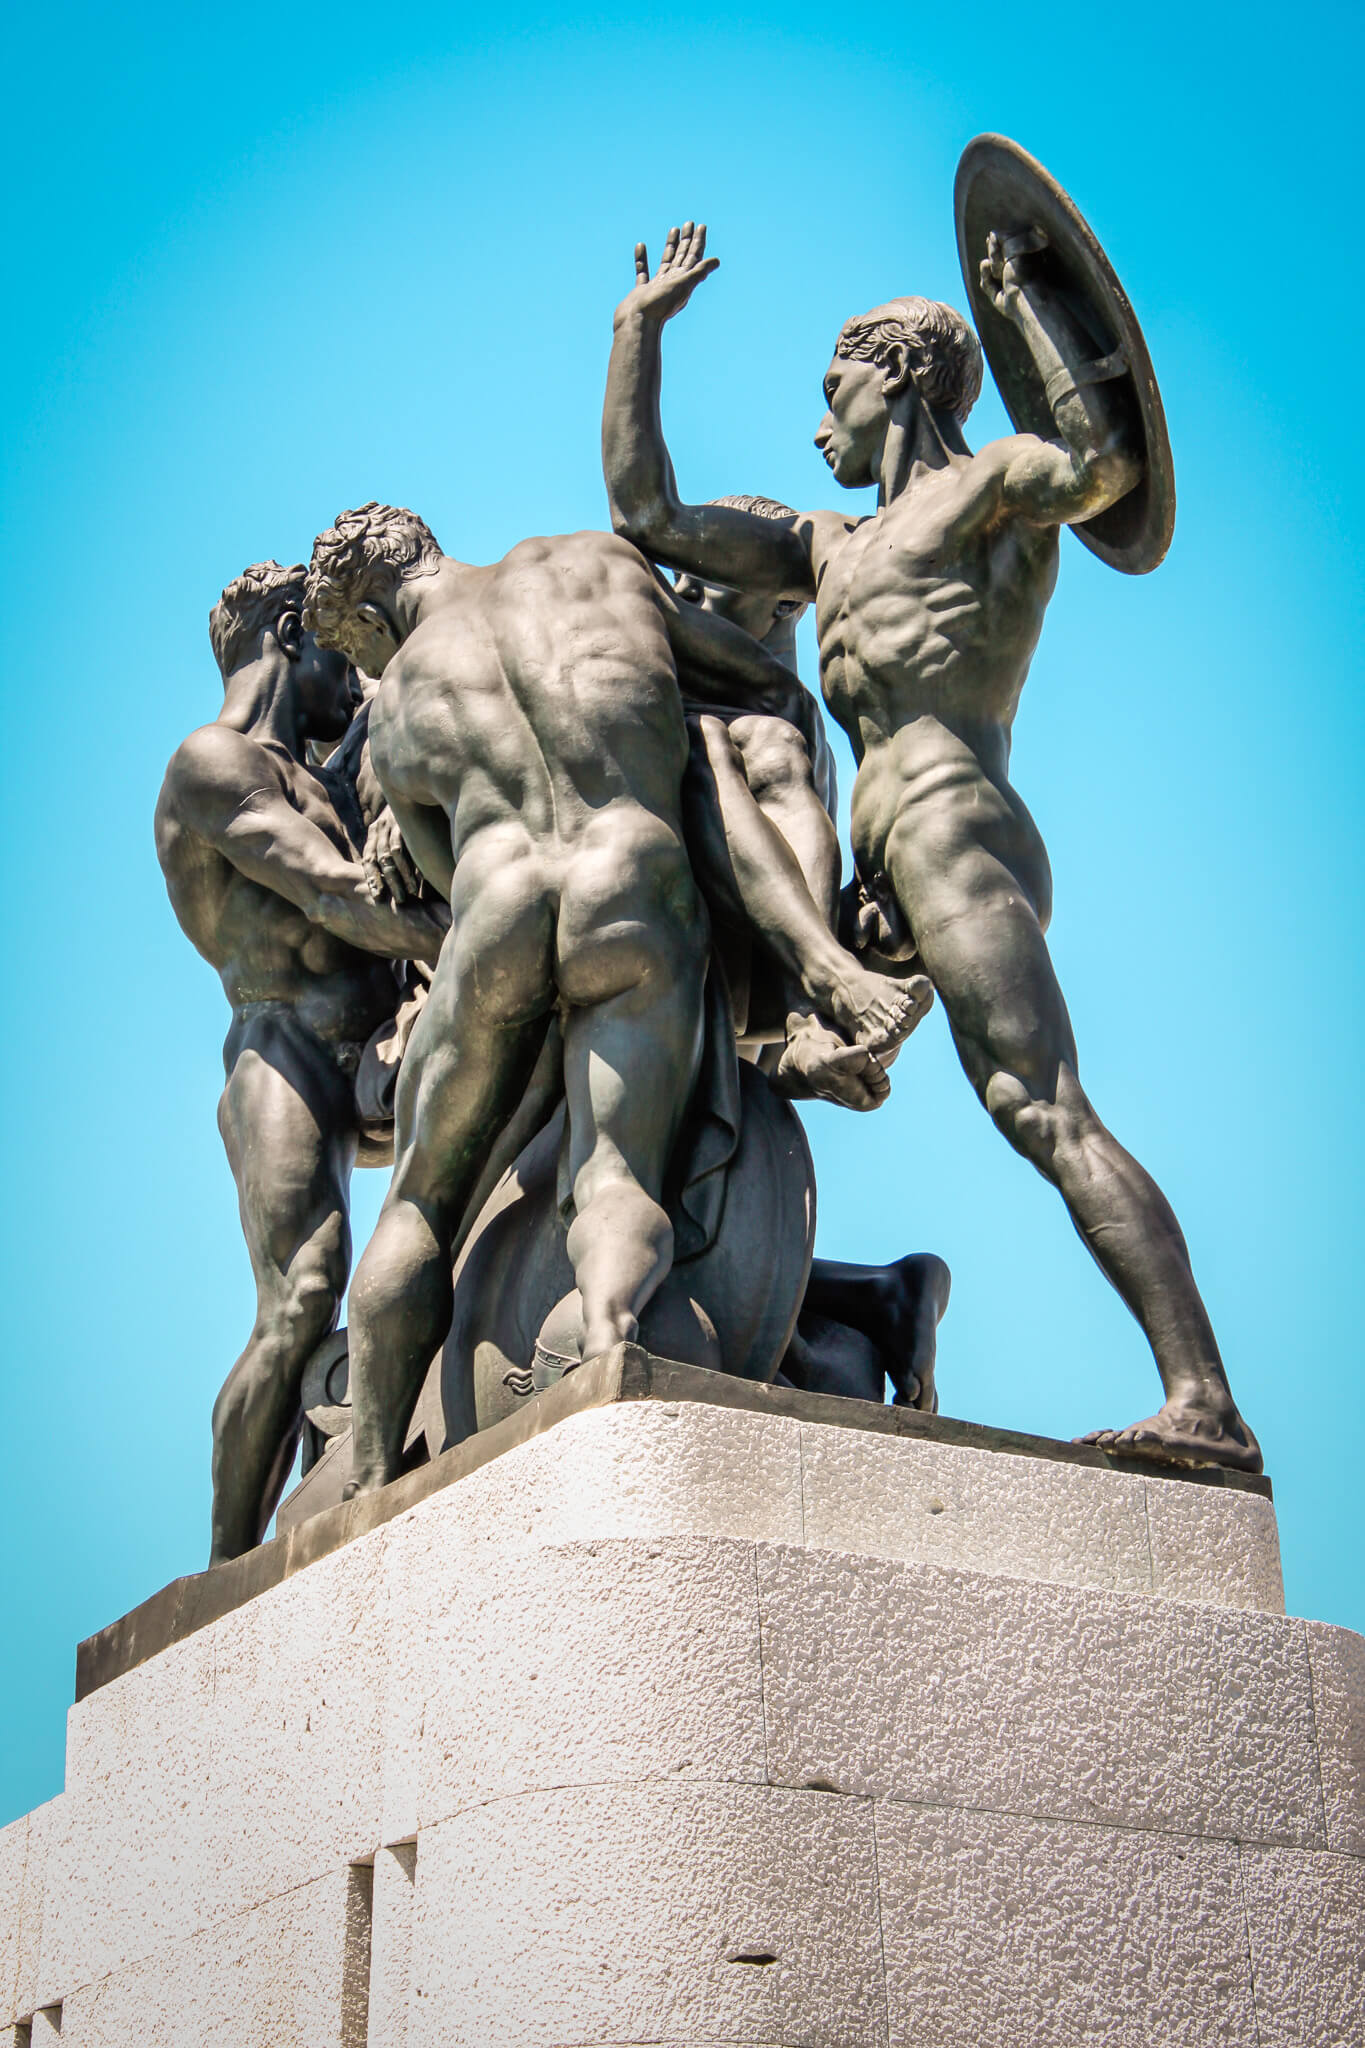 The Monumento ai Caduti, or War Memorial, in Trieste